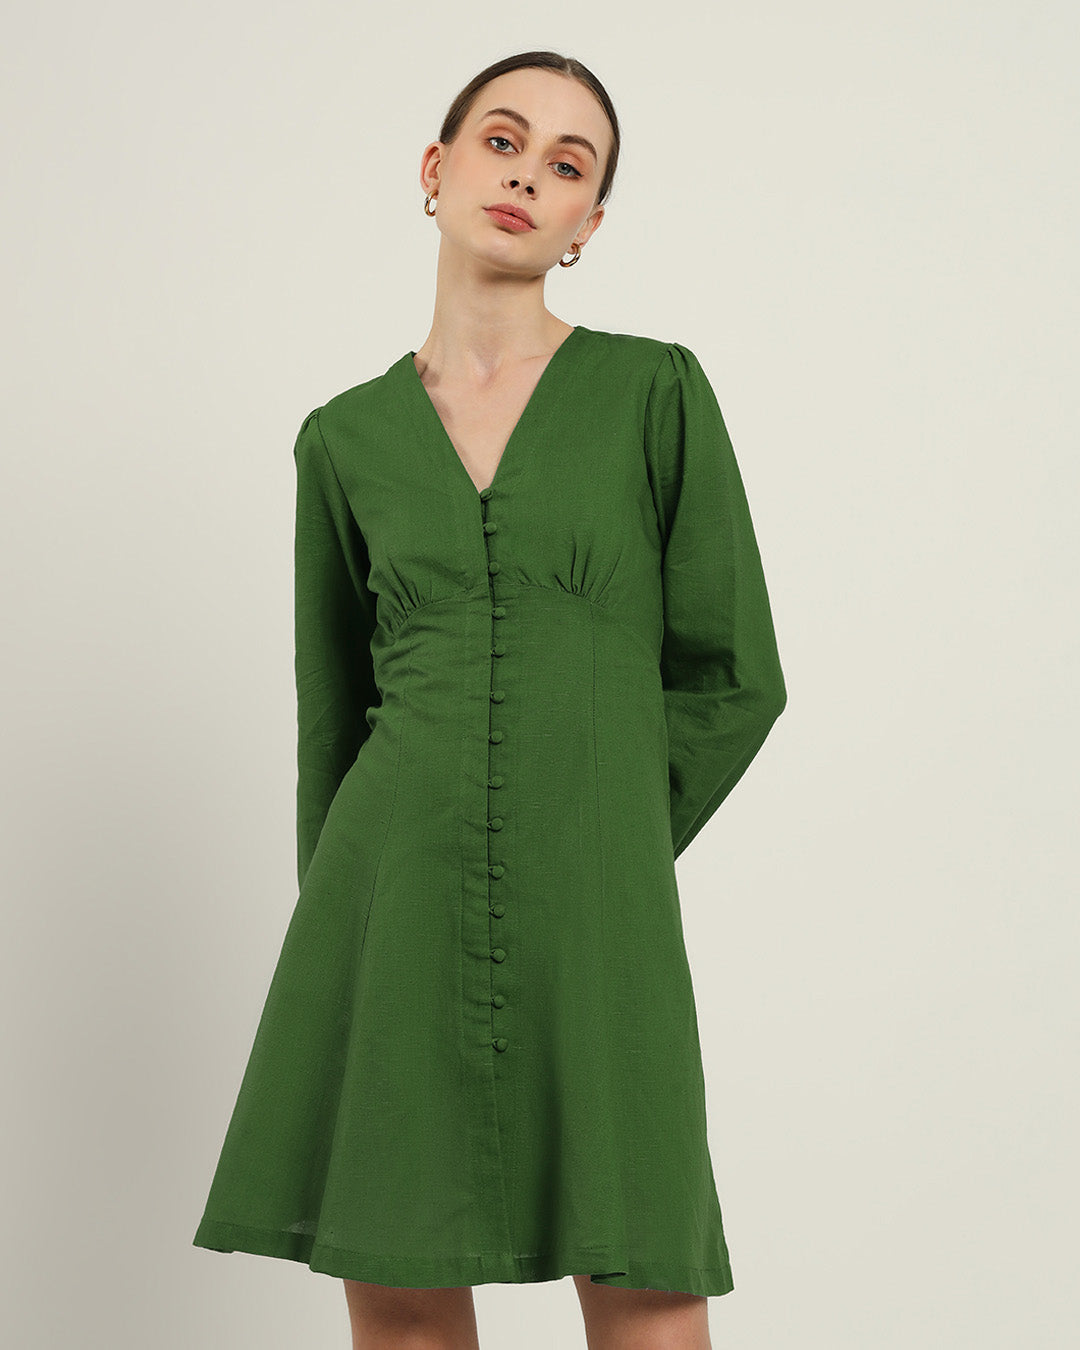 The Dafni Emerald Dress